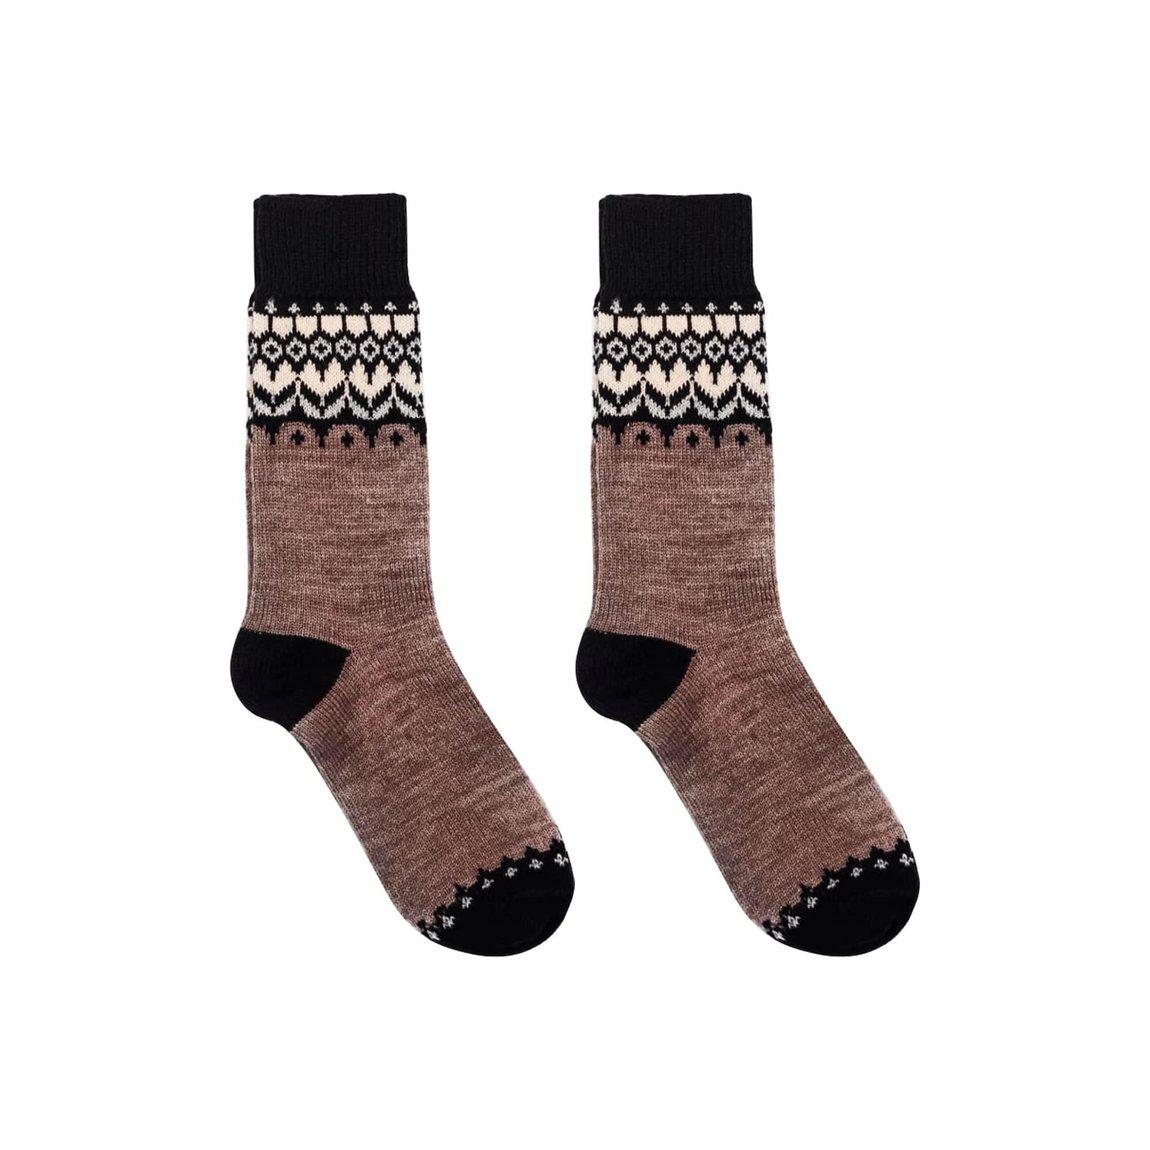 Nordic Wools Merino Jorunn Socks - Cinnamon - Unisex scandinavian 